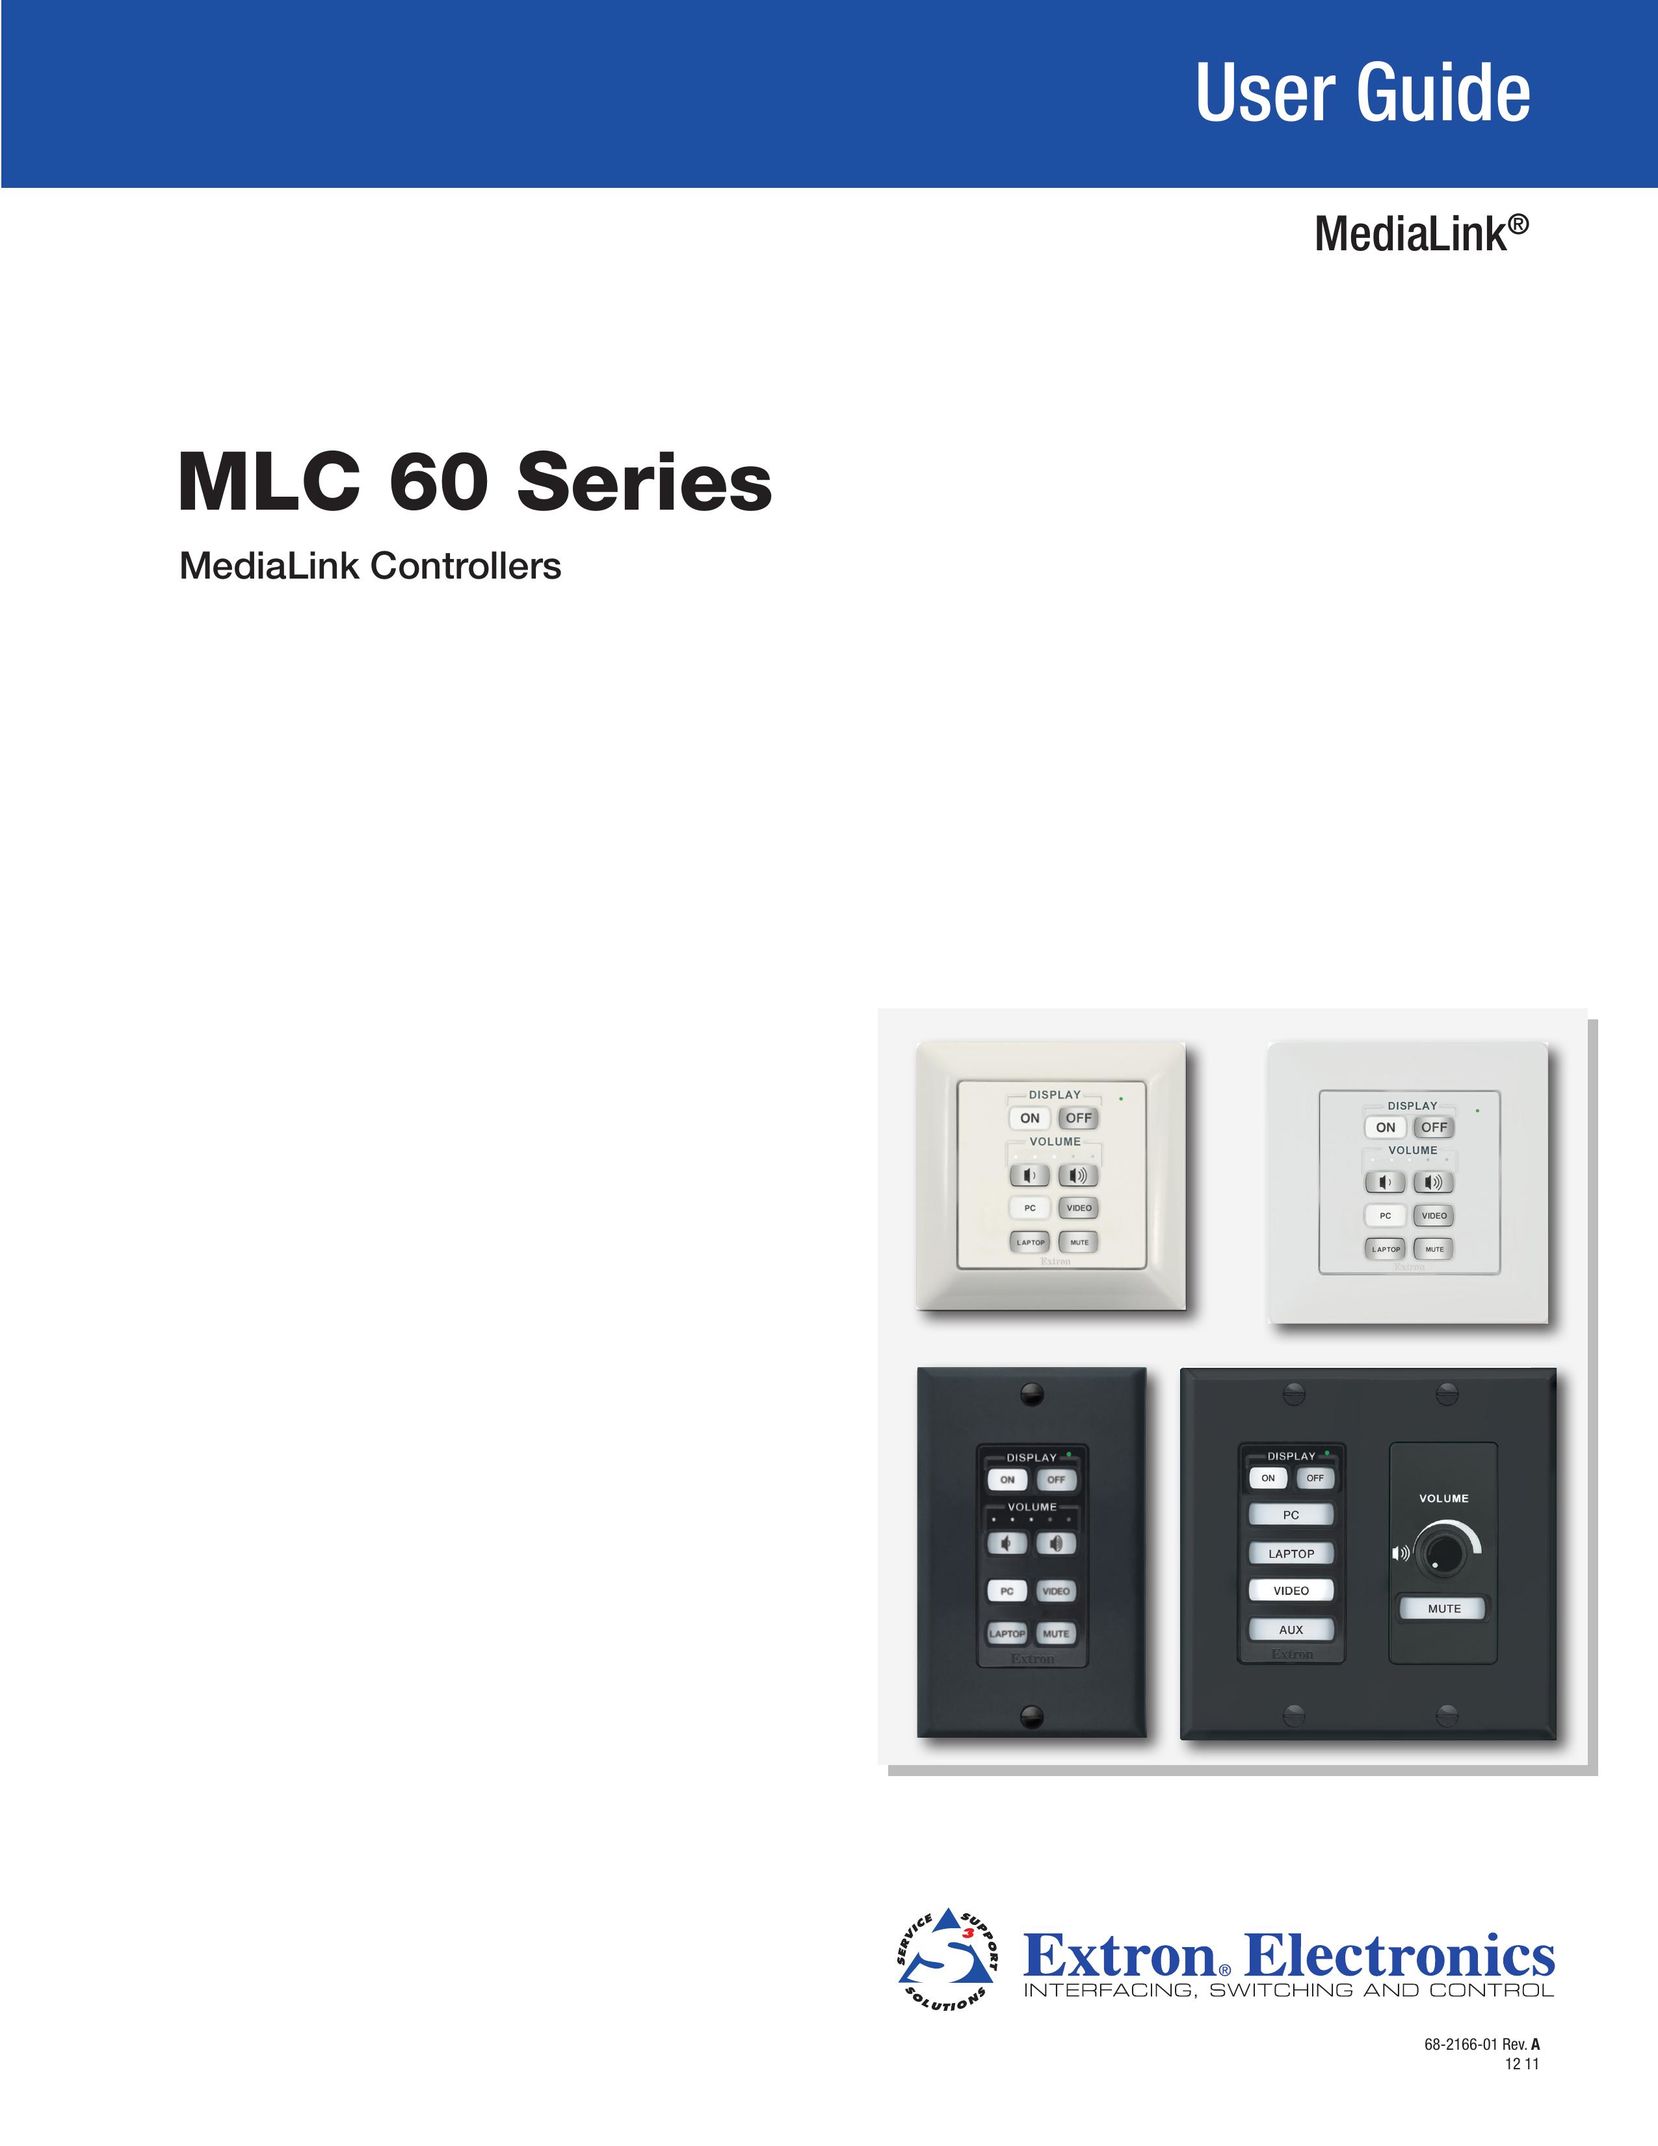 Extron electronic MLC 62 IR D Video Game Keyboard User Manual